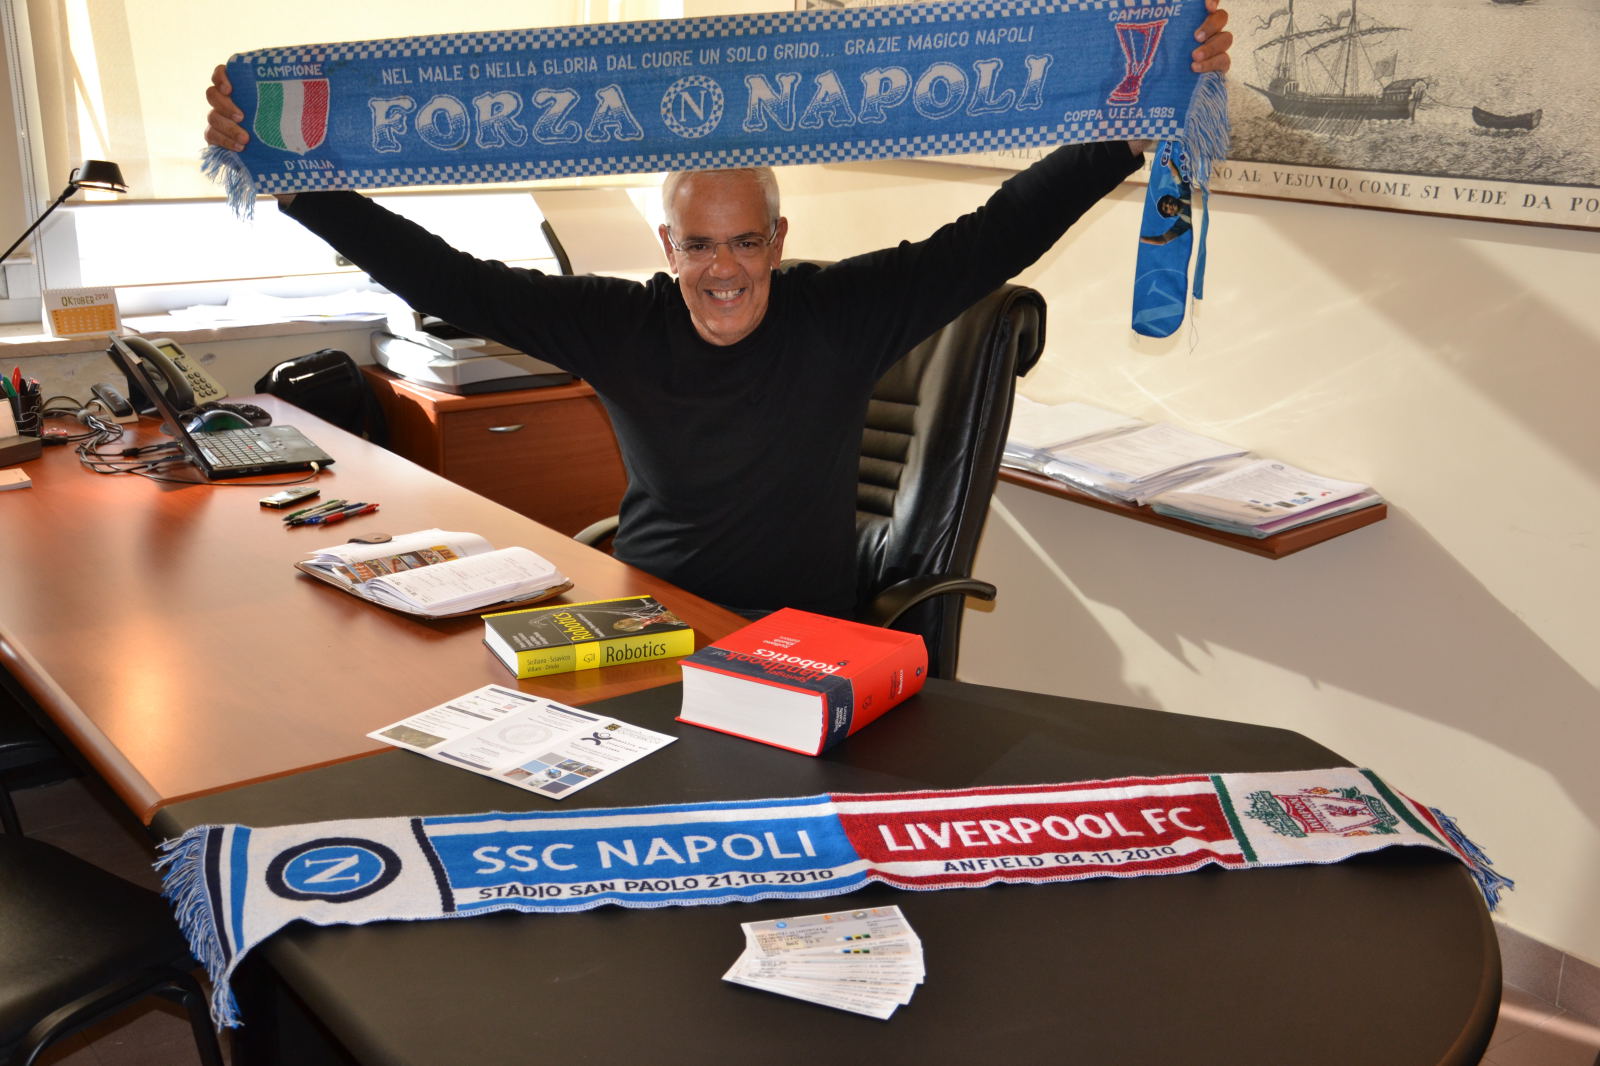 Napoli-Liverpool: 21 October 2010